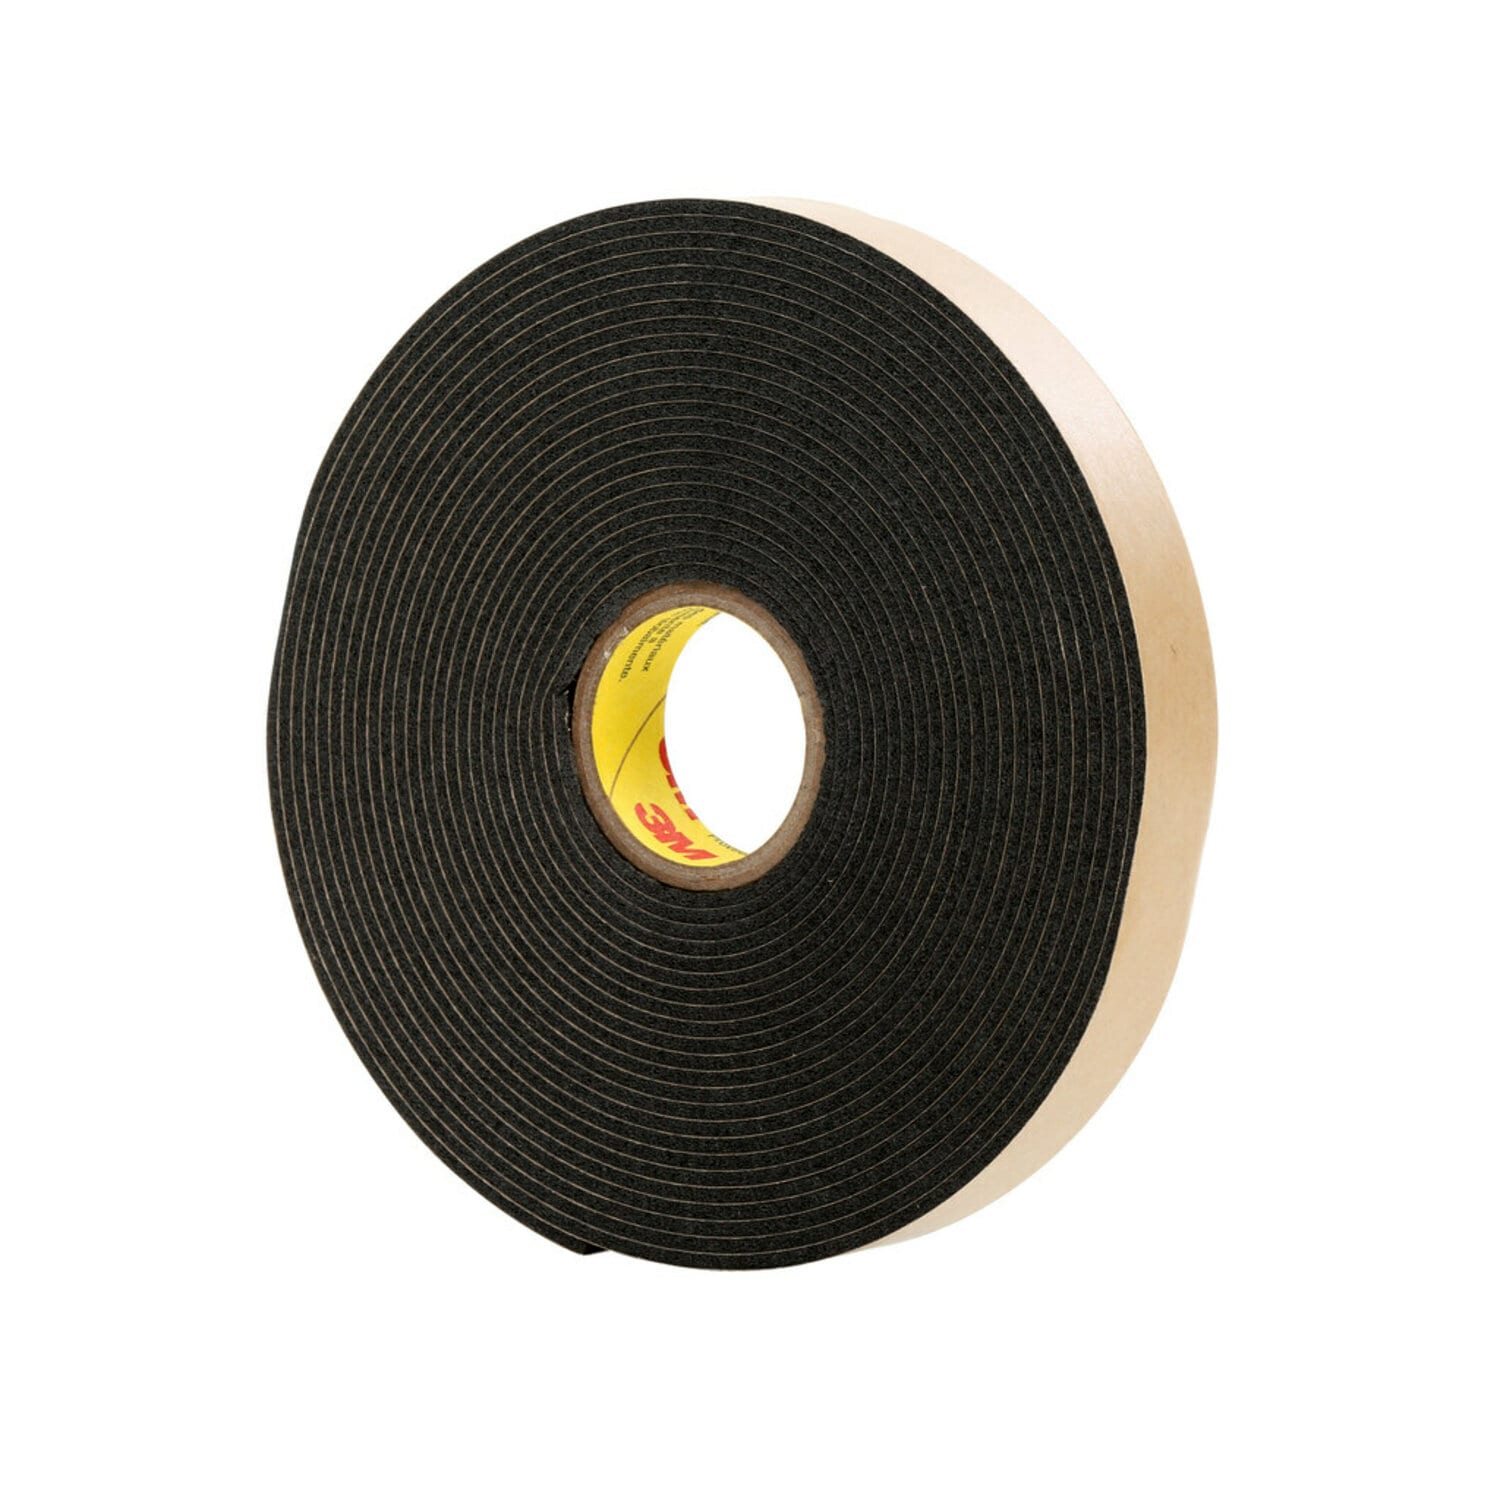 7100073721 - 3M Double Coated Polyethylene Foam Tape 4496B, Black, 62 mil, Roll,
Config